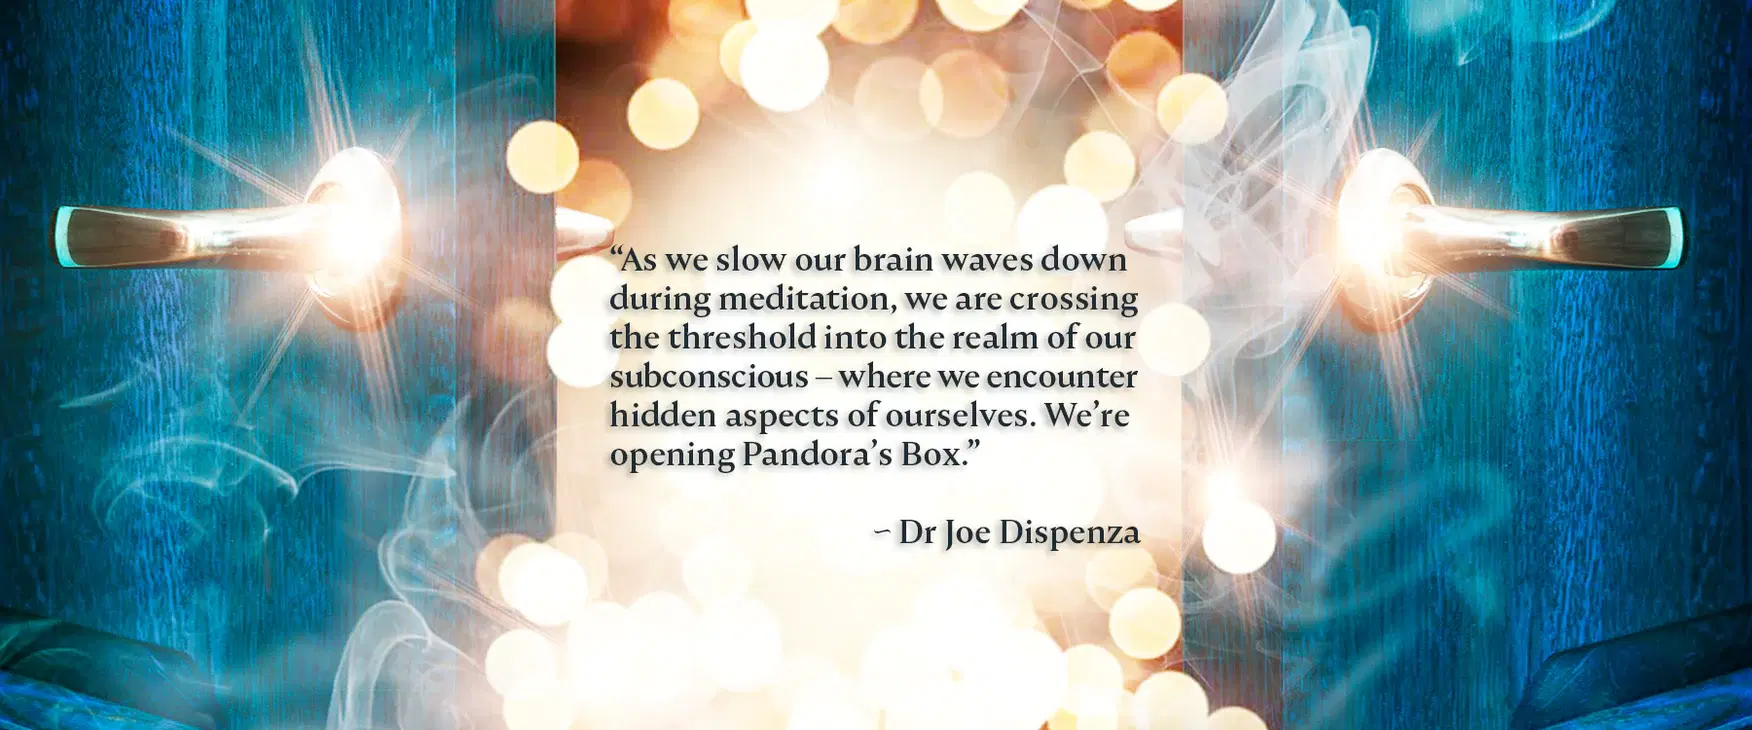 Opening Pandora’s Box, Part I: Crossing the Threshold